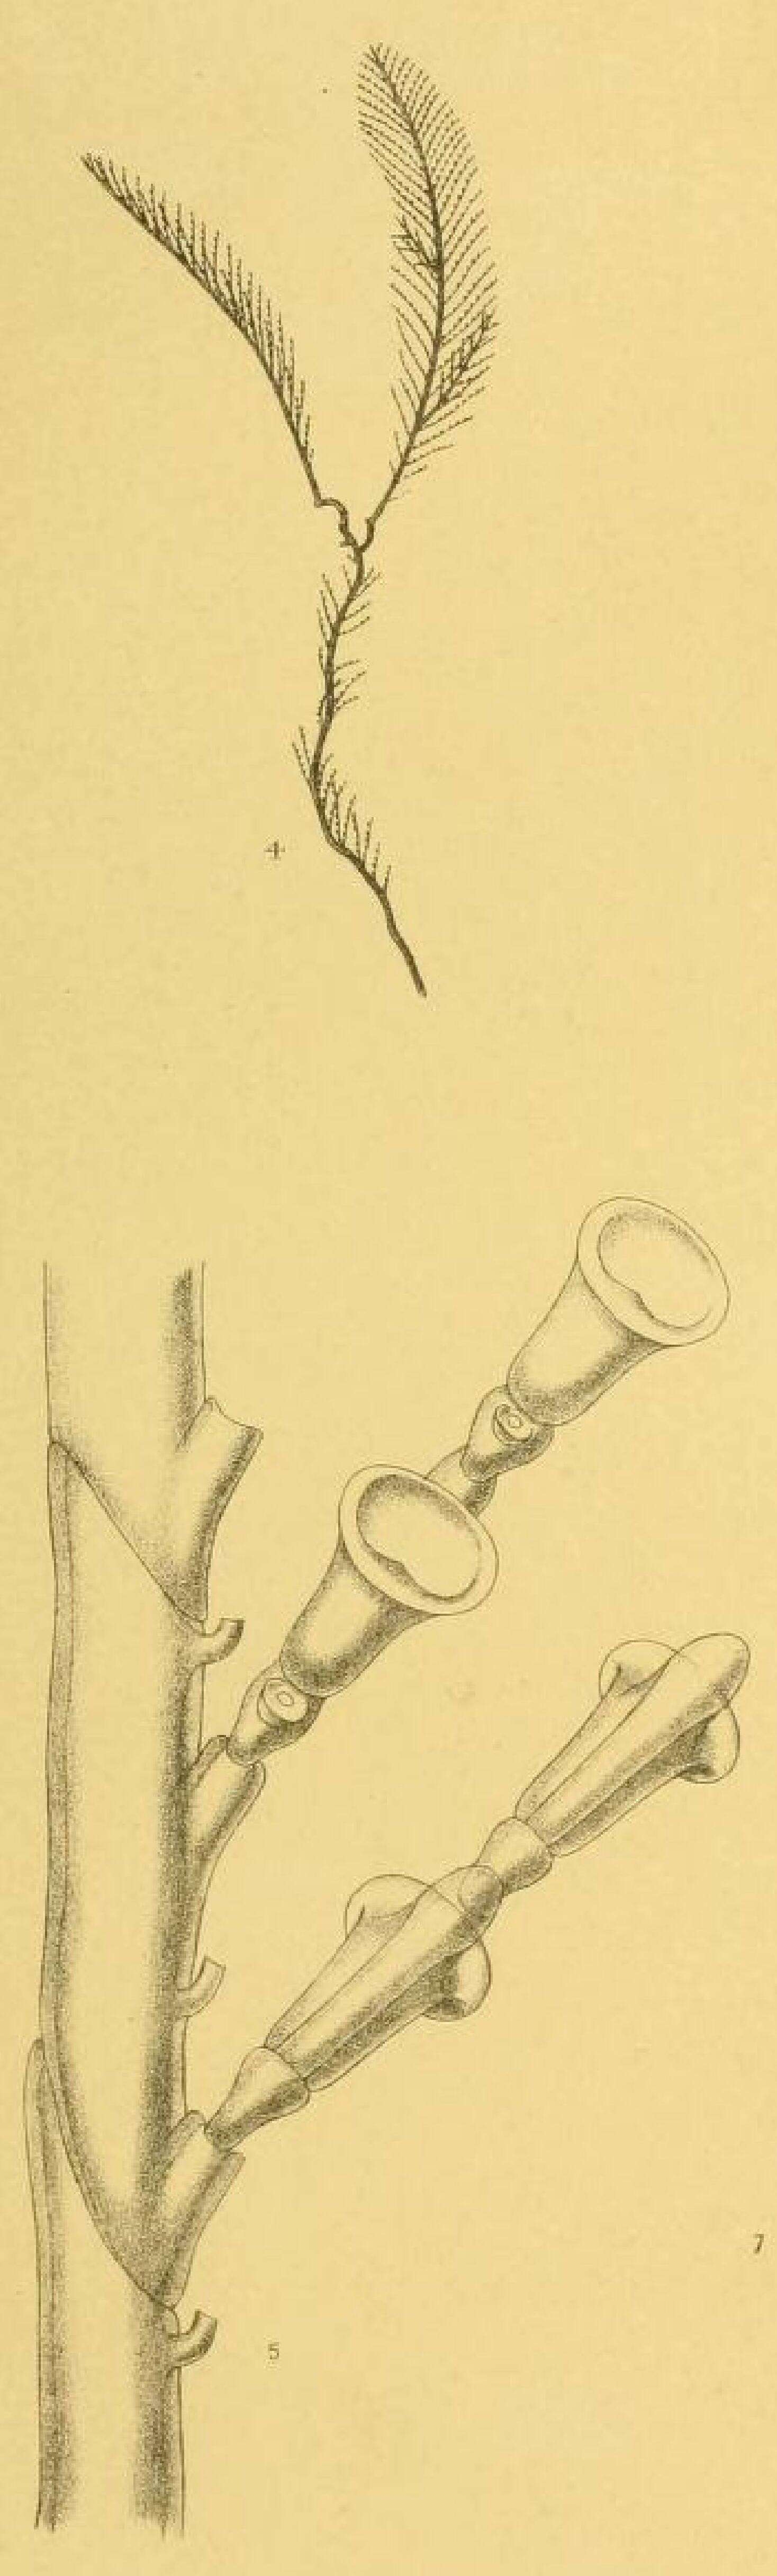 Image of Pycnotheca mirabilis (Allman 1883)